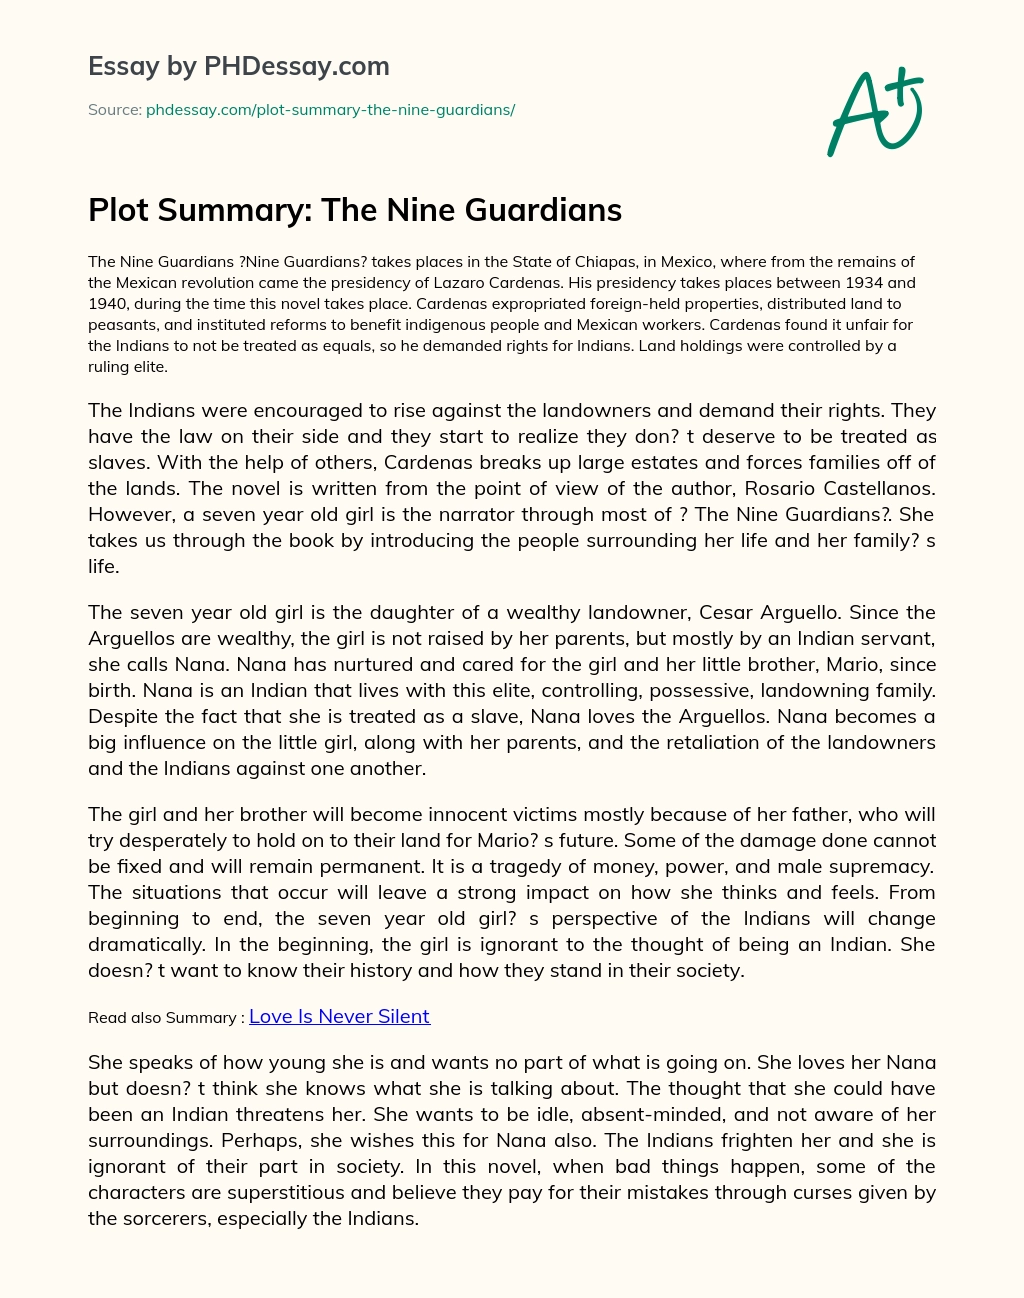 Plot Summary: The Nine Guardians essay